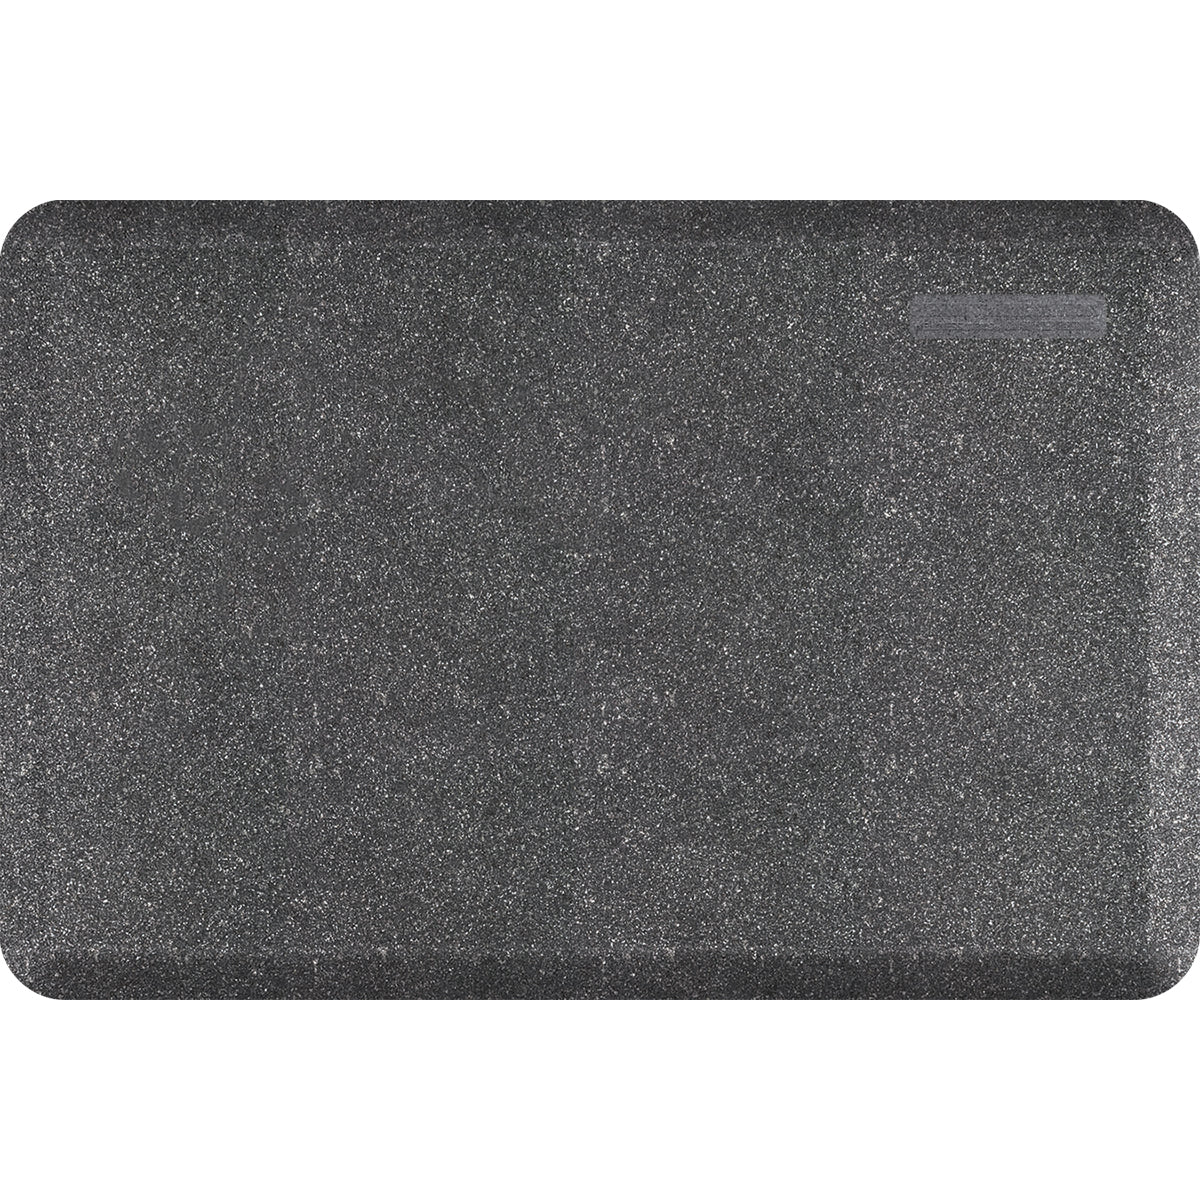 WellnessMats Granite Collection - Quality Anti-Fatigue Mats